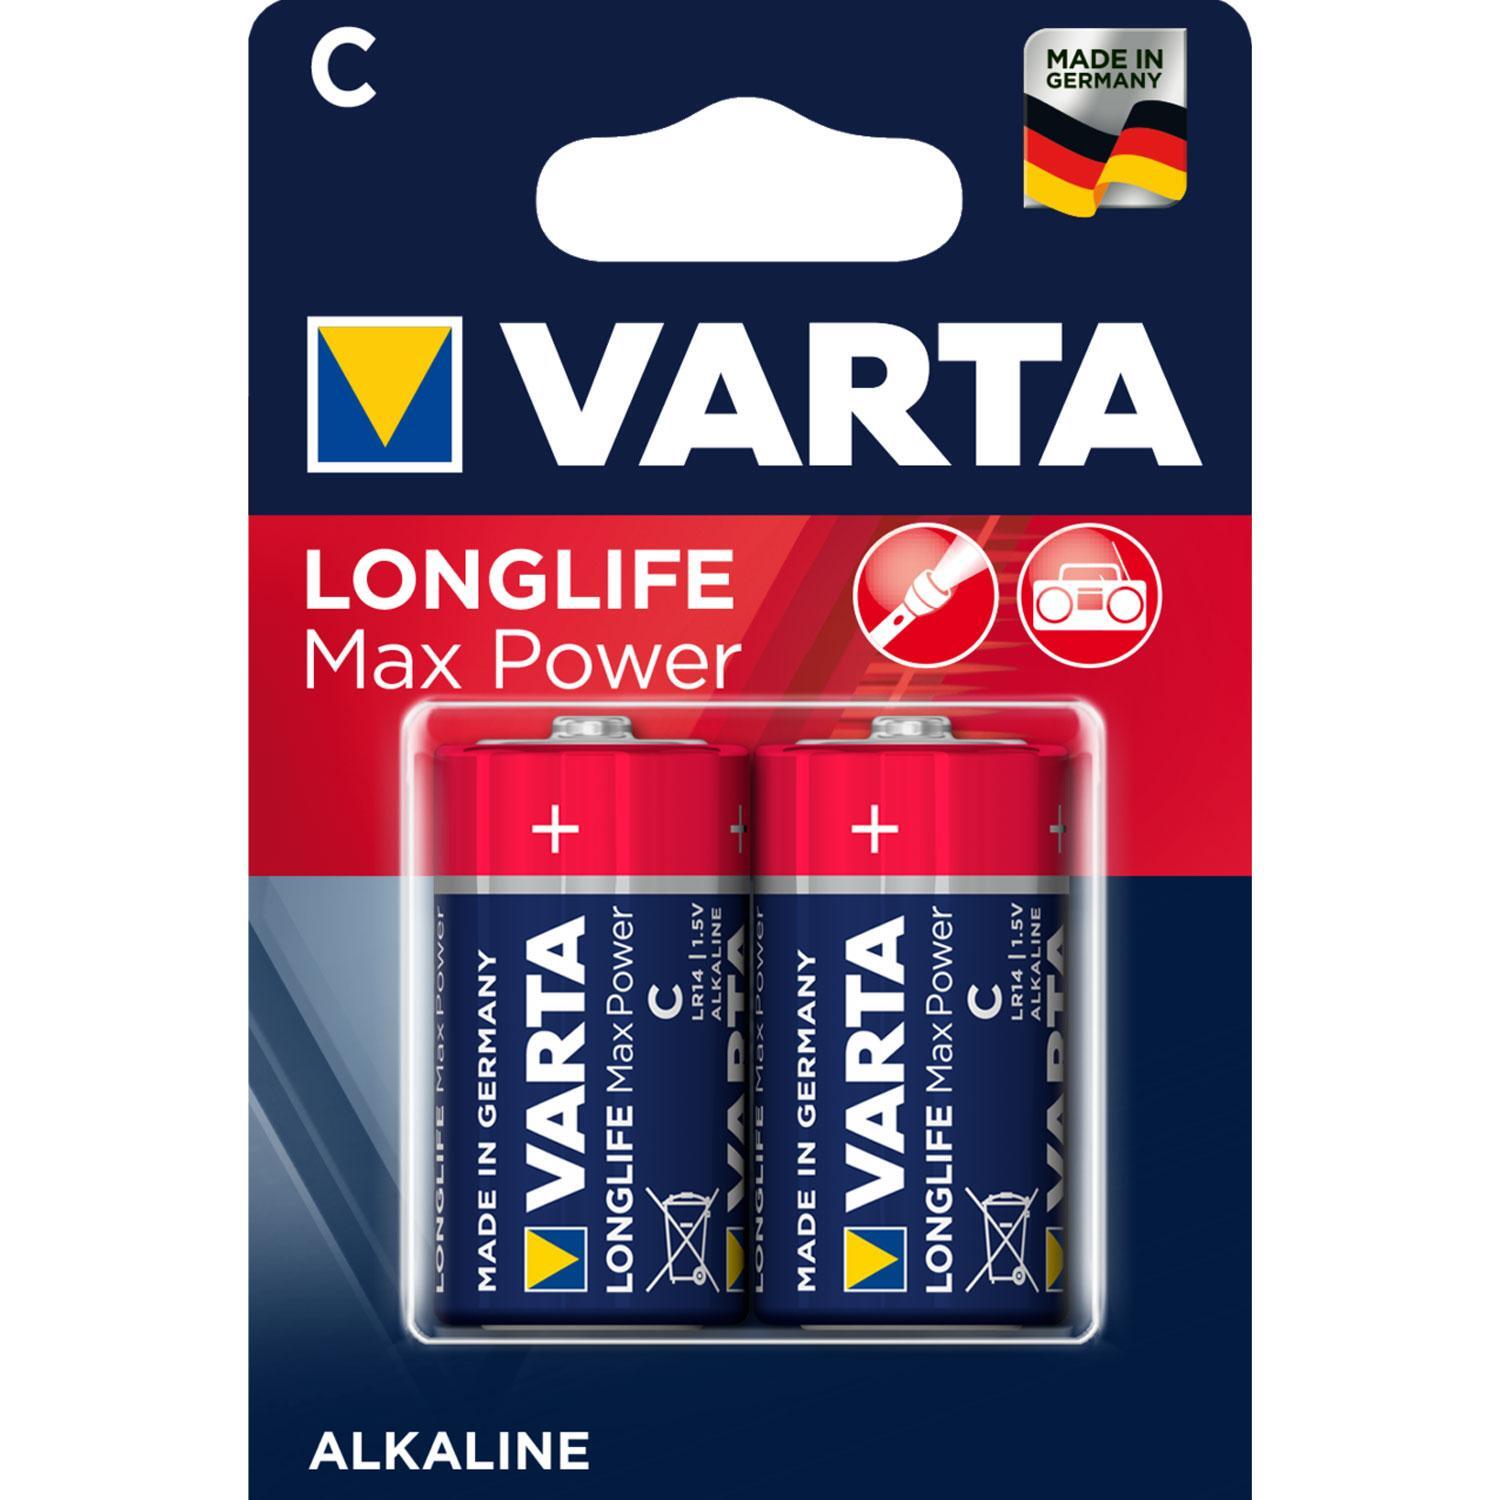 Varta Longlife Max Power C-batterier (2-pak) | Elgiganten